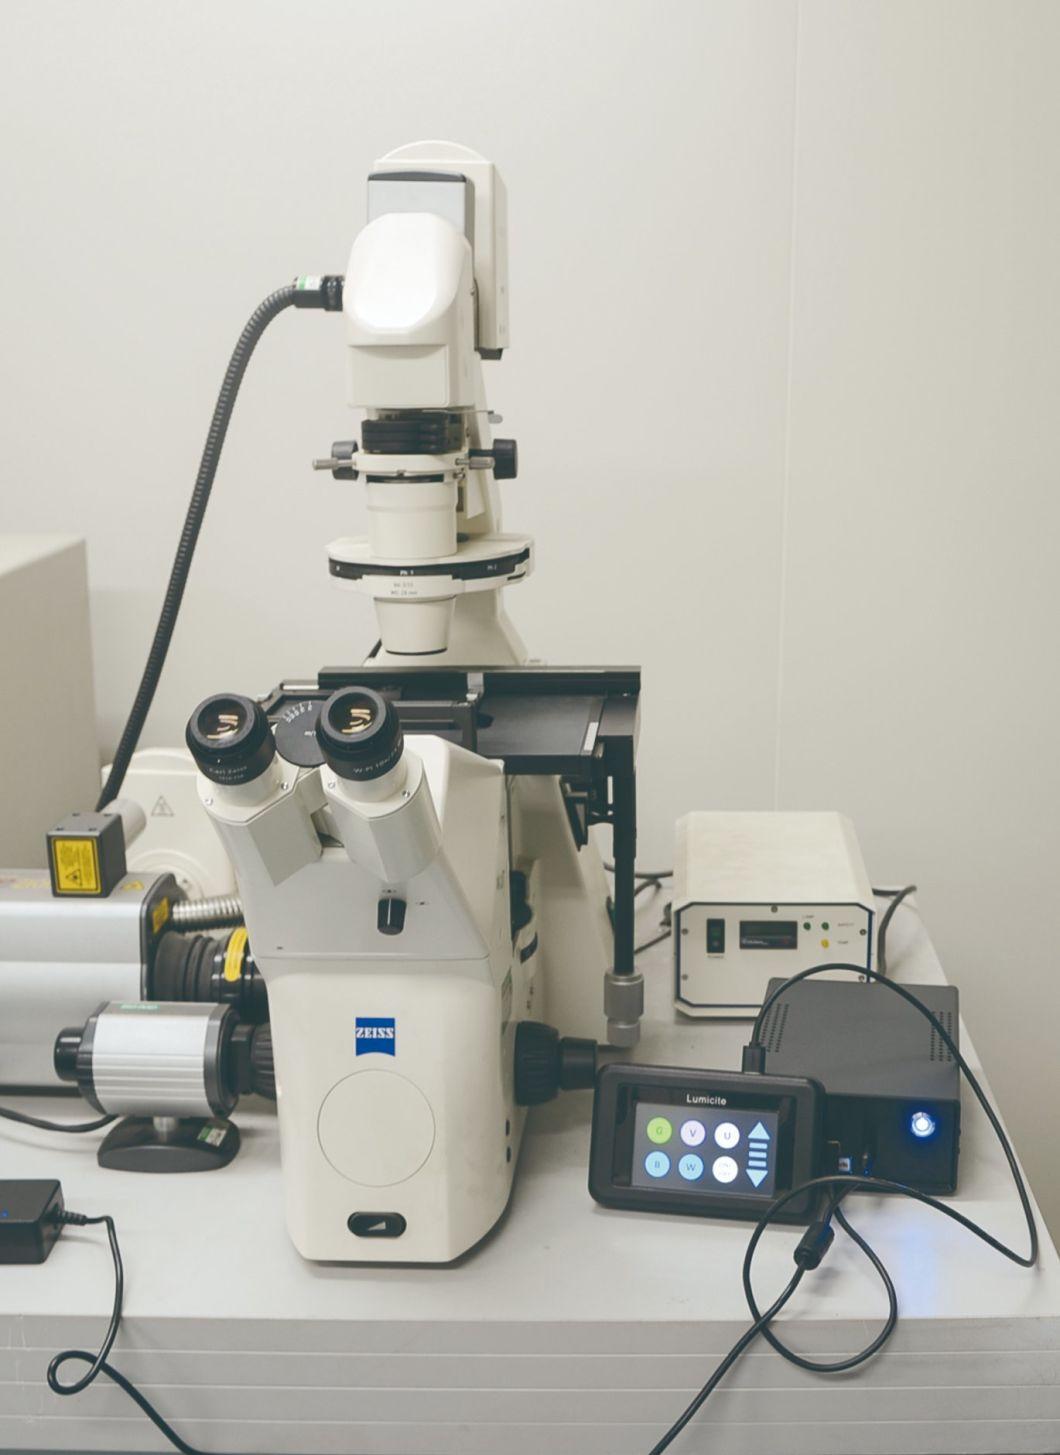 LED Lighting Source for Optical Microscope